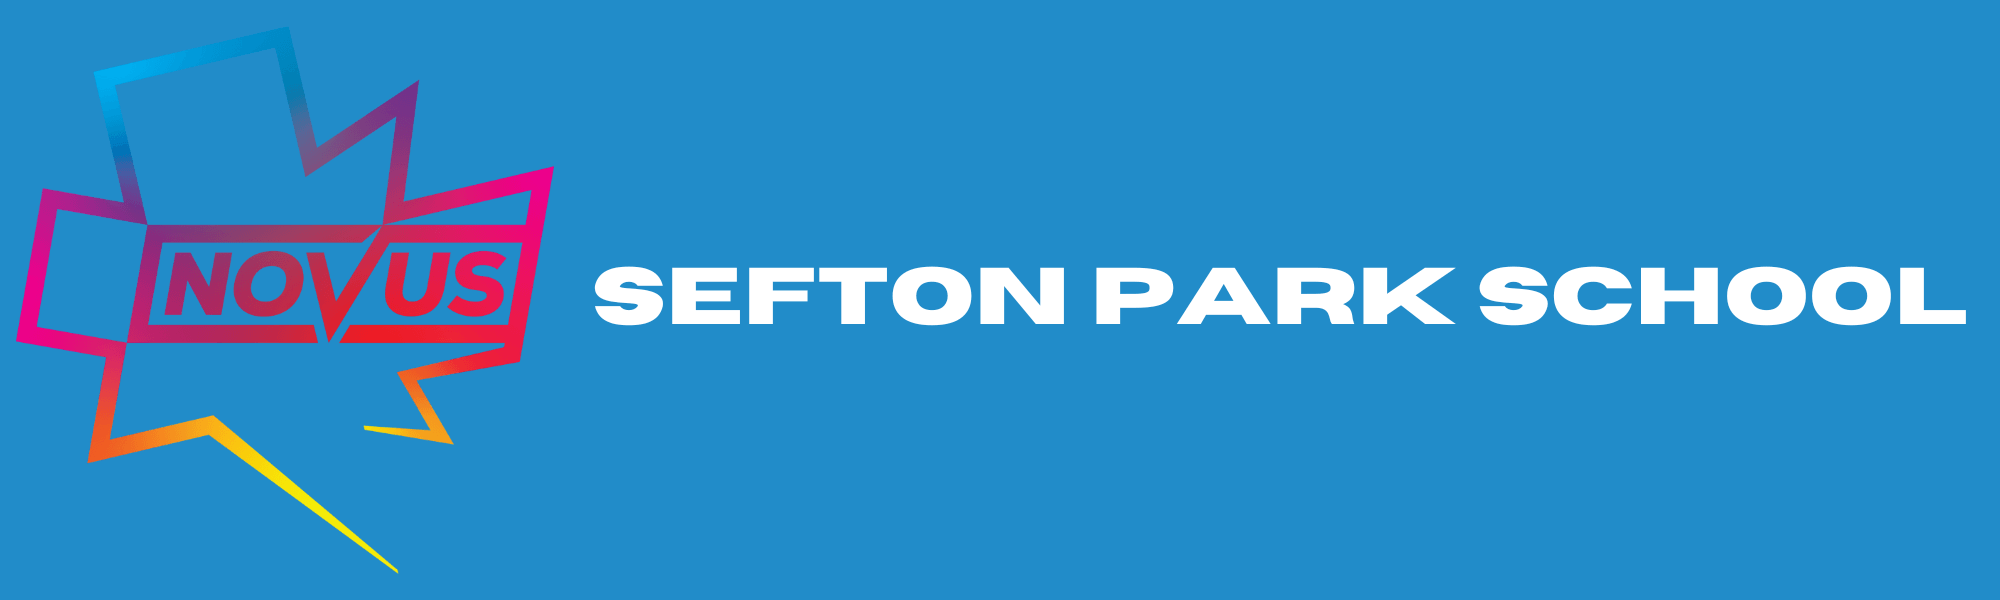 Sefton Park School Banner